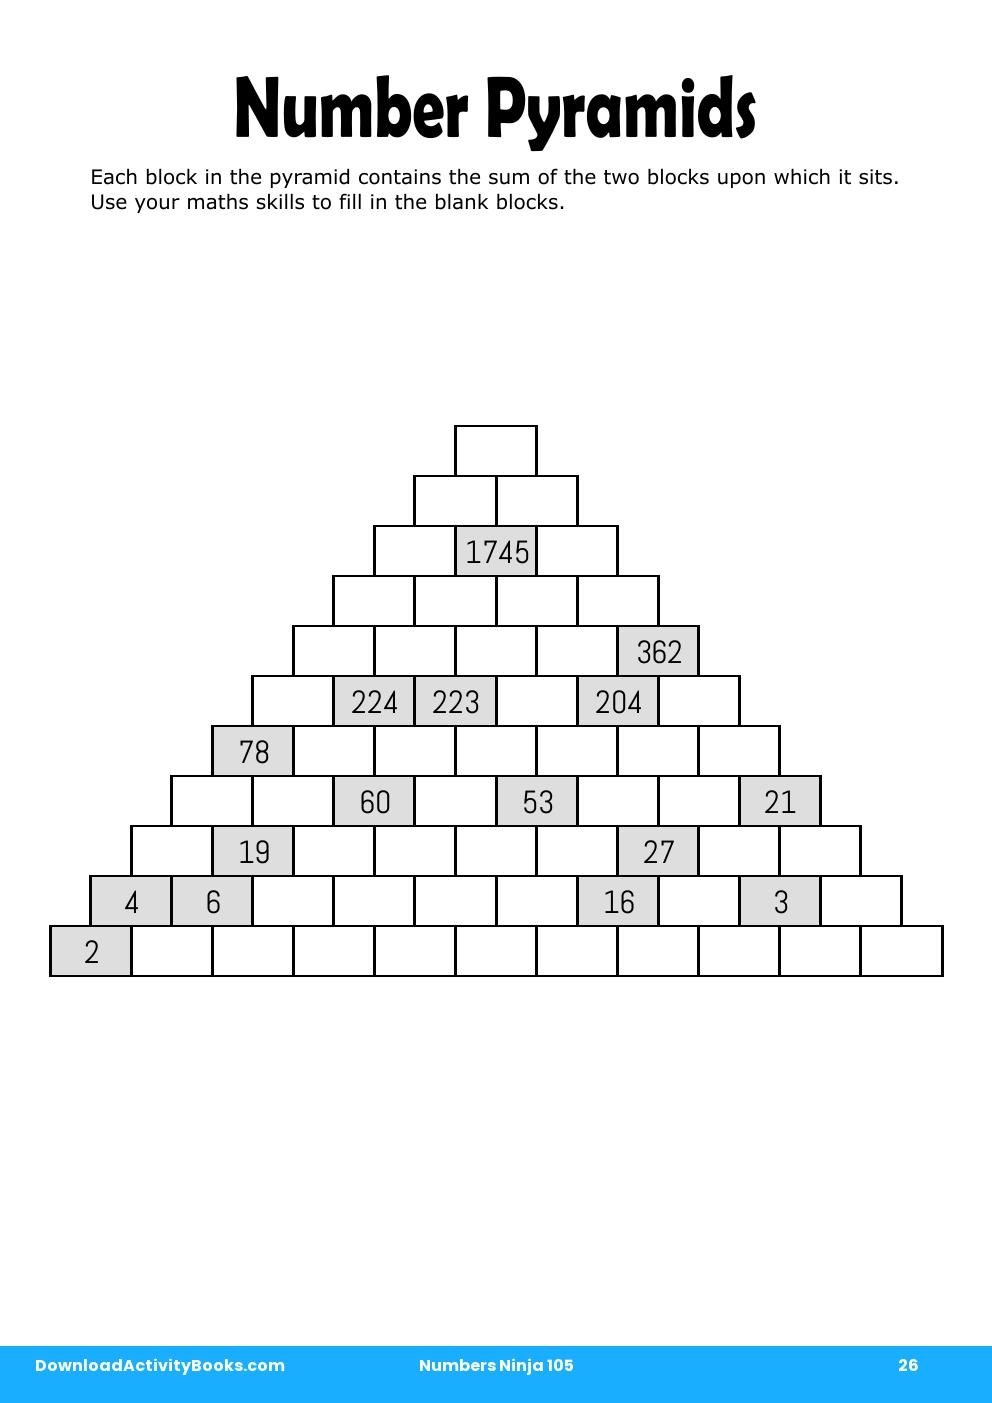 Number Pyramids in Numbers Ninja 105